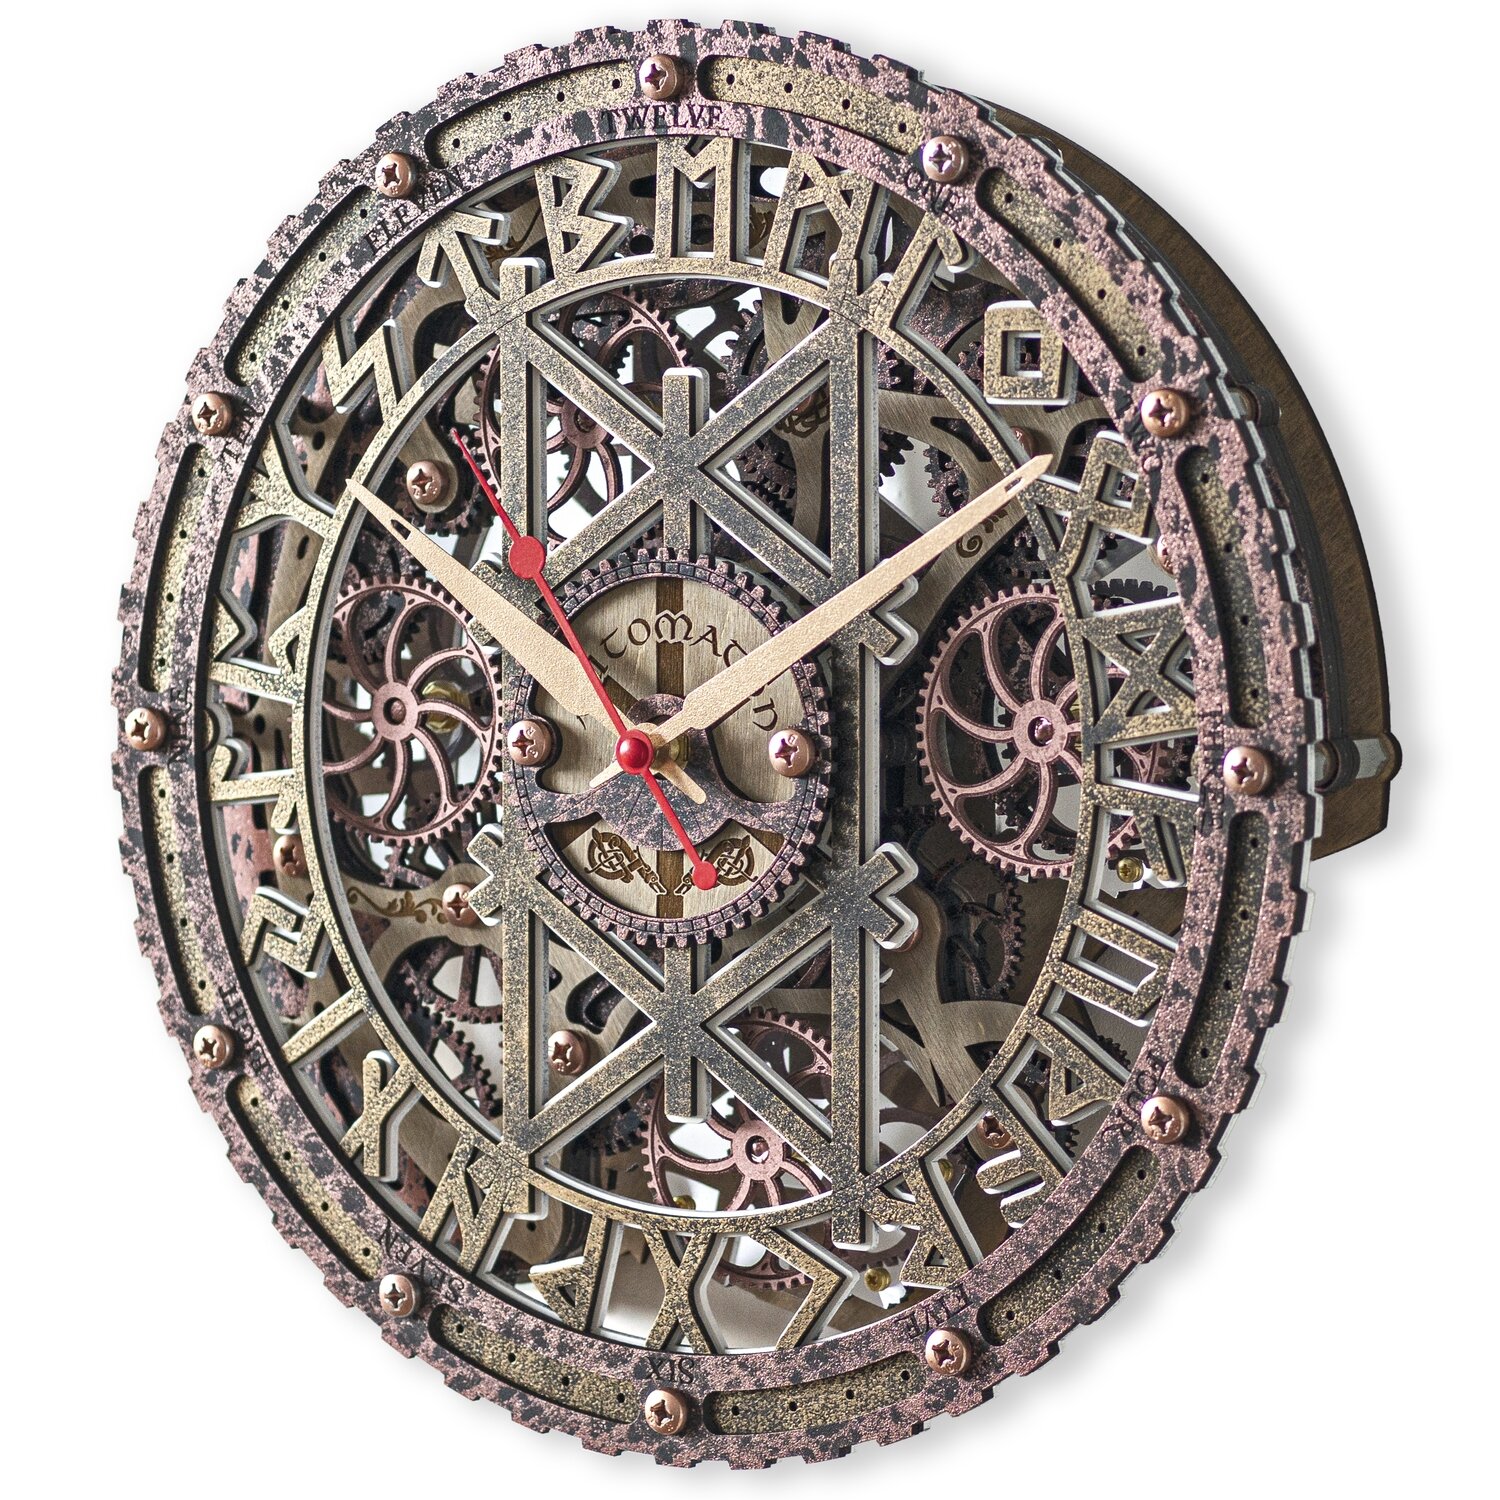 Automaton Bite 1682 Web of Wyrd Wall Clock